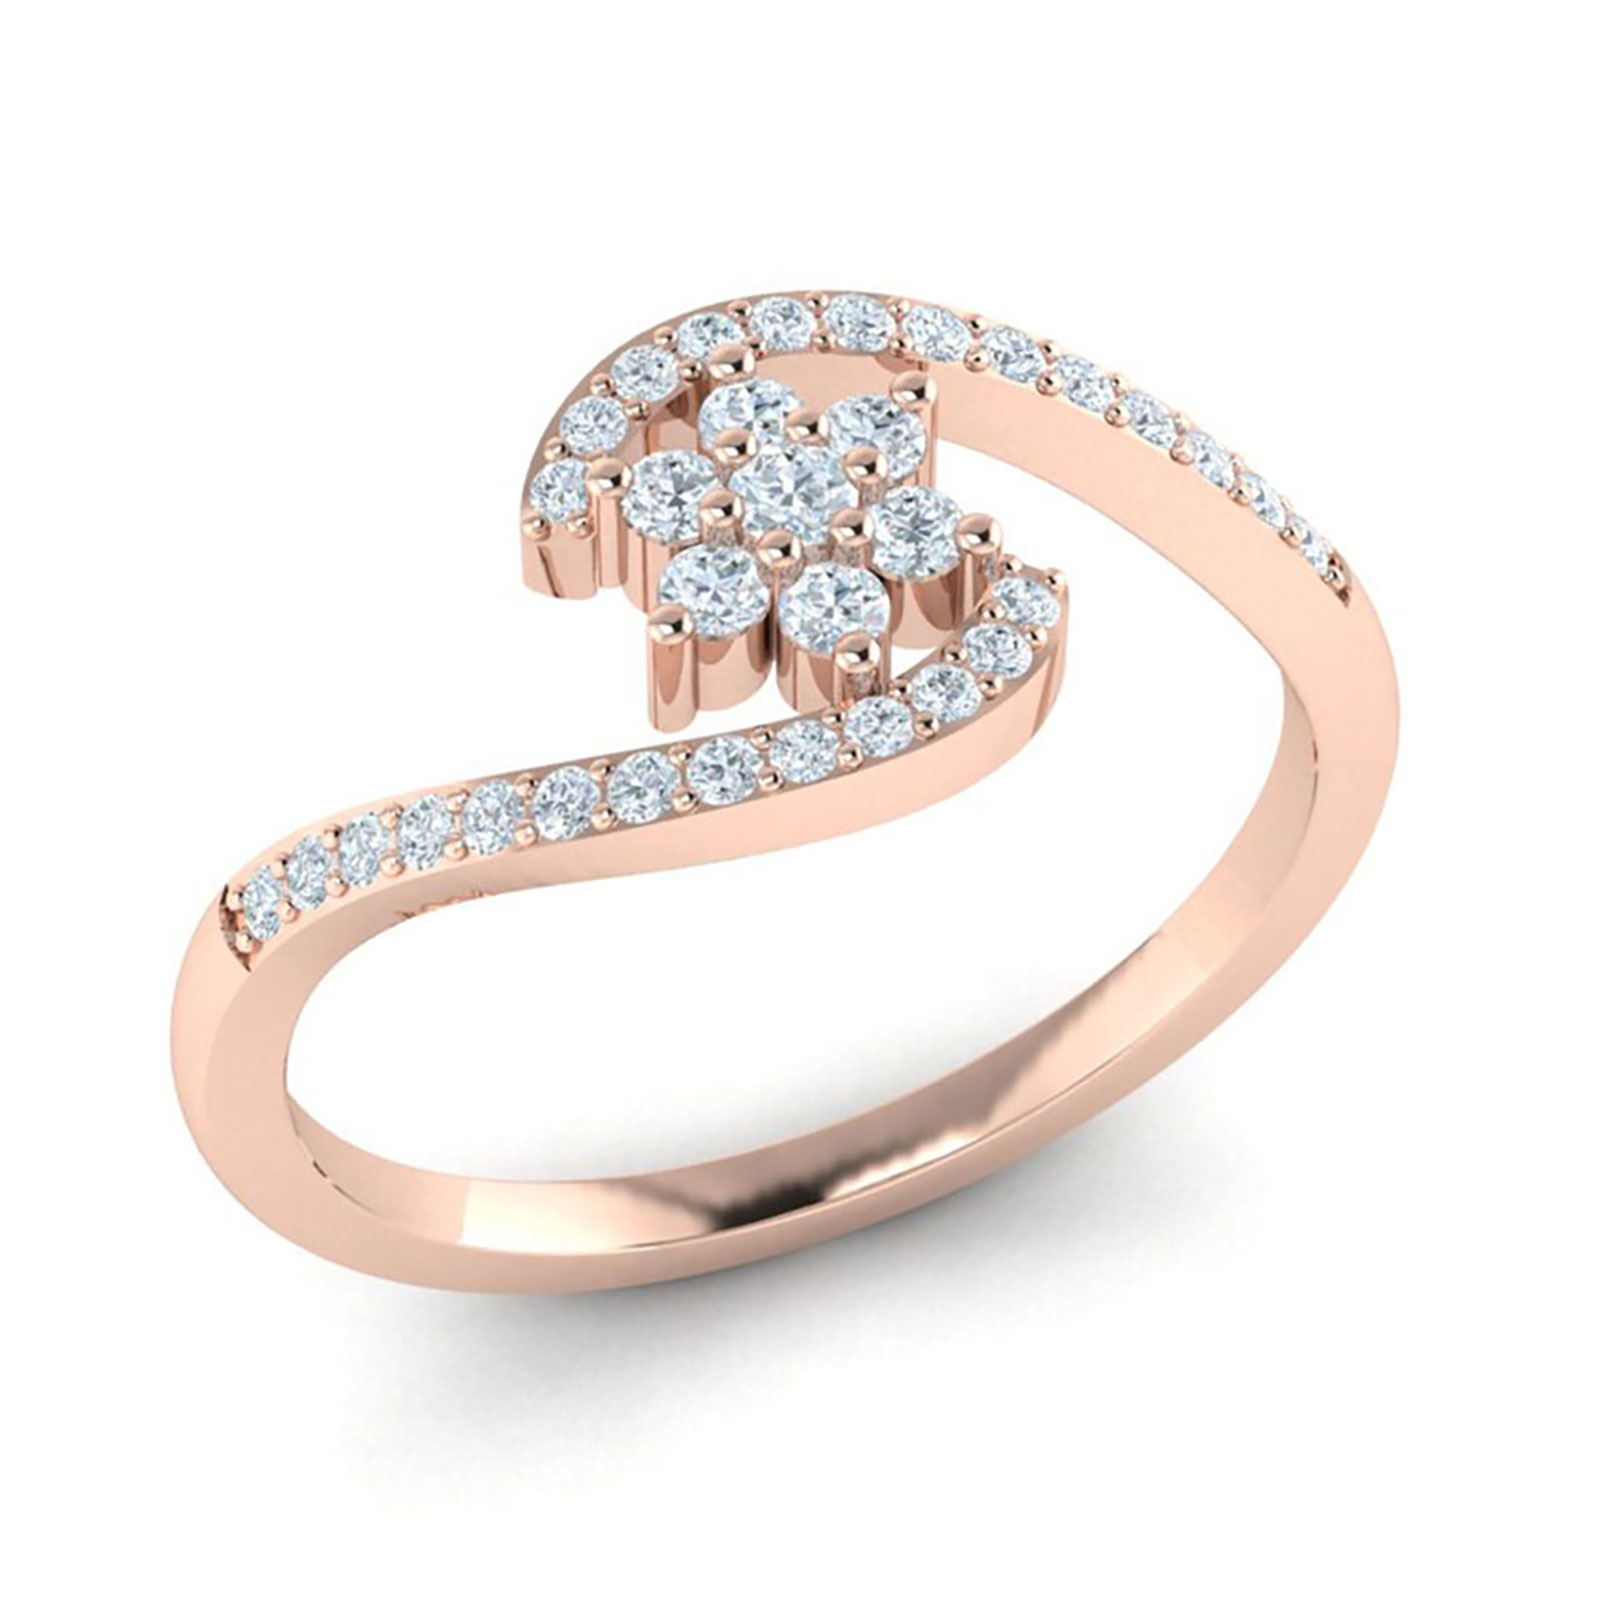 Jewel We Sell Real 0.3carat Round Cut Diamond Fancy Ladies Engagement Bridal Ring Anniversary 14K Rose Gold